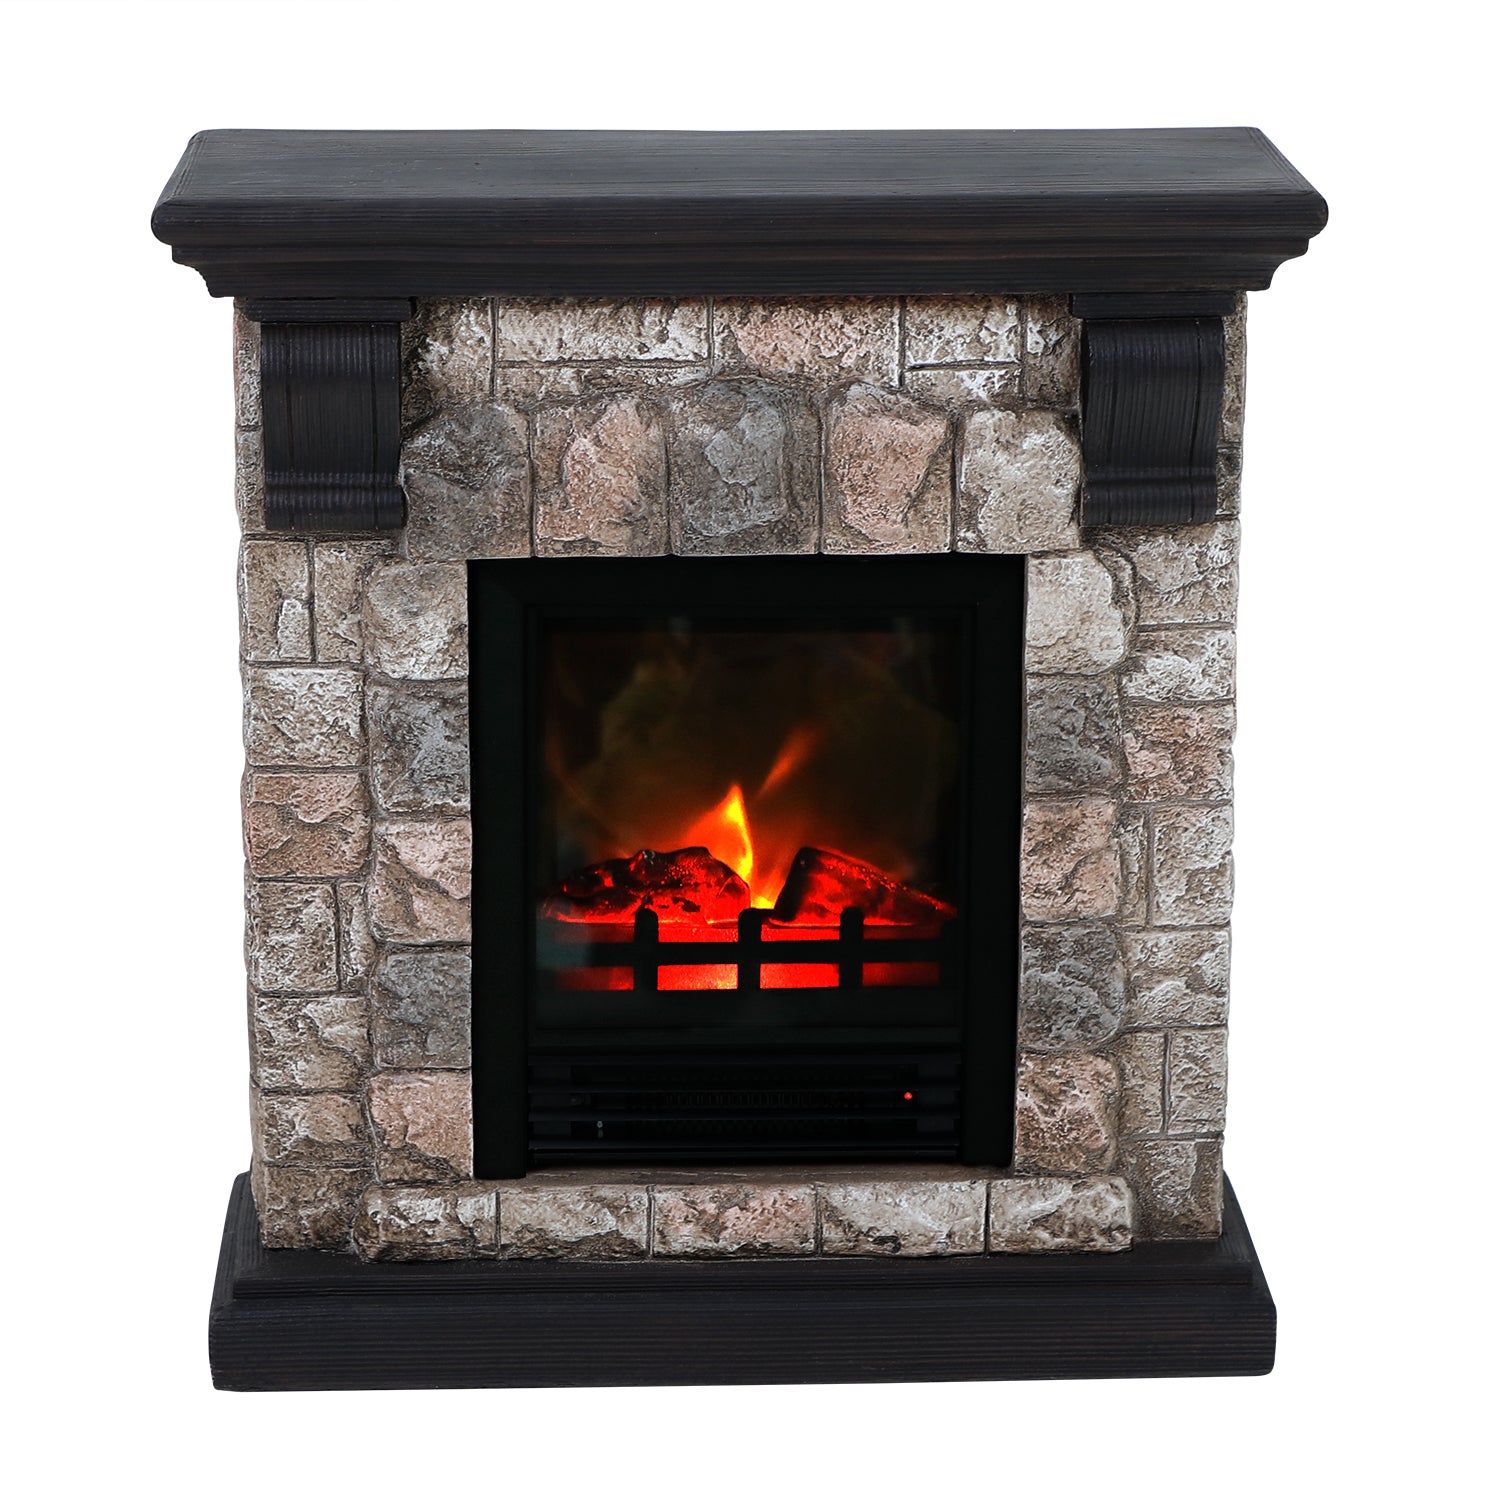 PHI VILLA Faux Stone Freestanding Electric Fireplace, 1250W